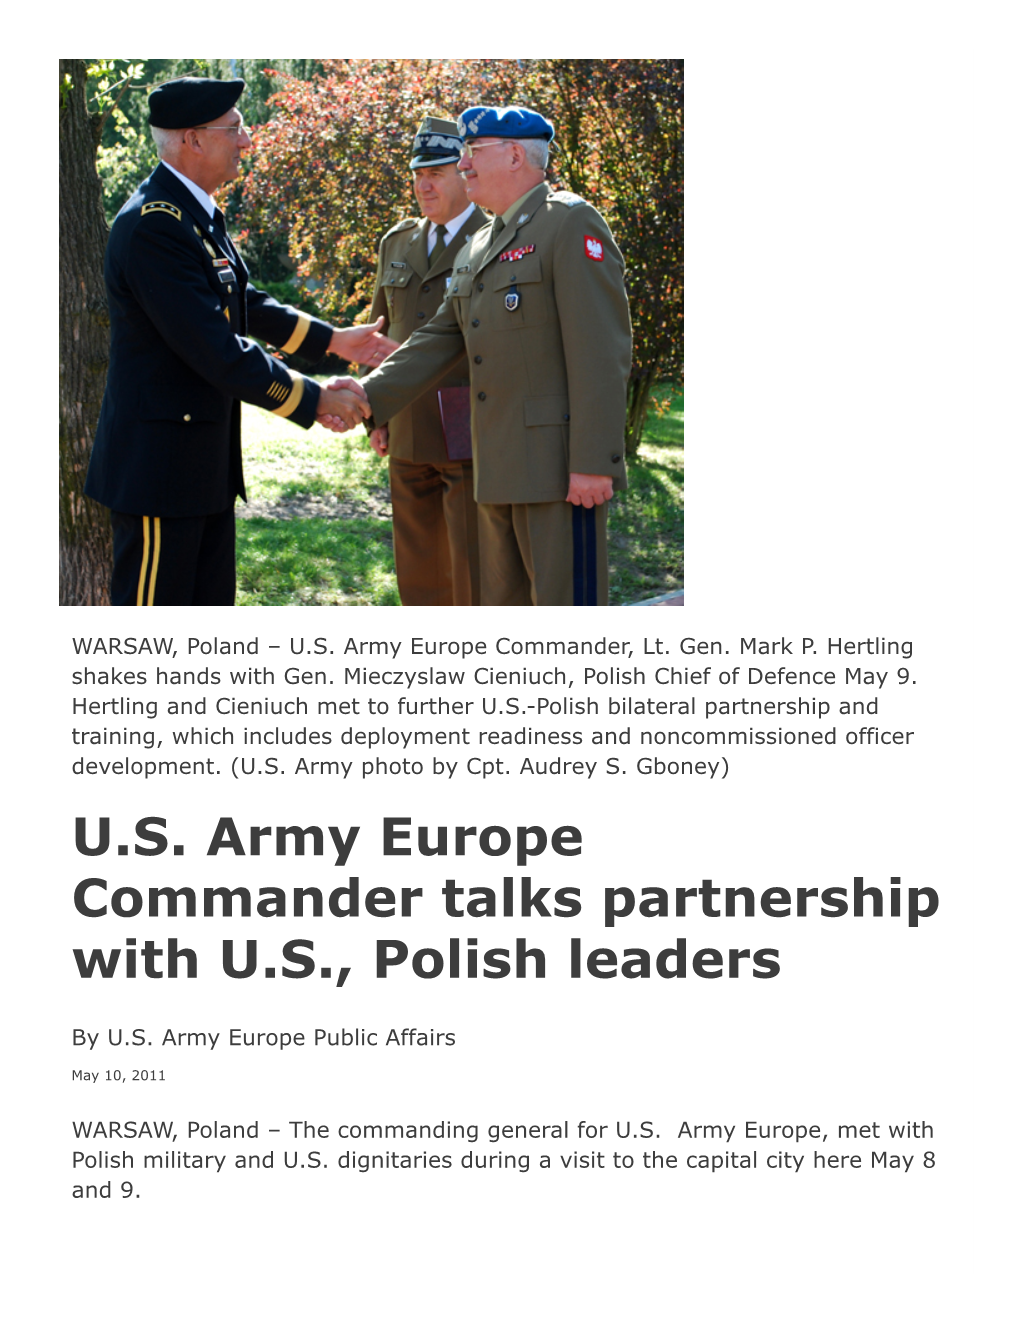 U.S. Army Europe Commander Talks Partnership with U.S., Polish Leaders